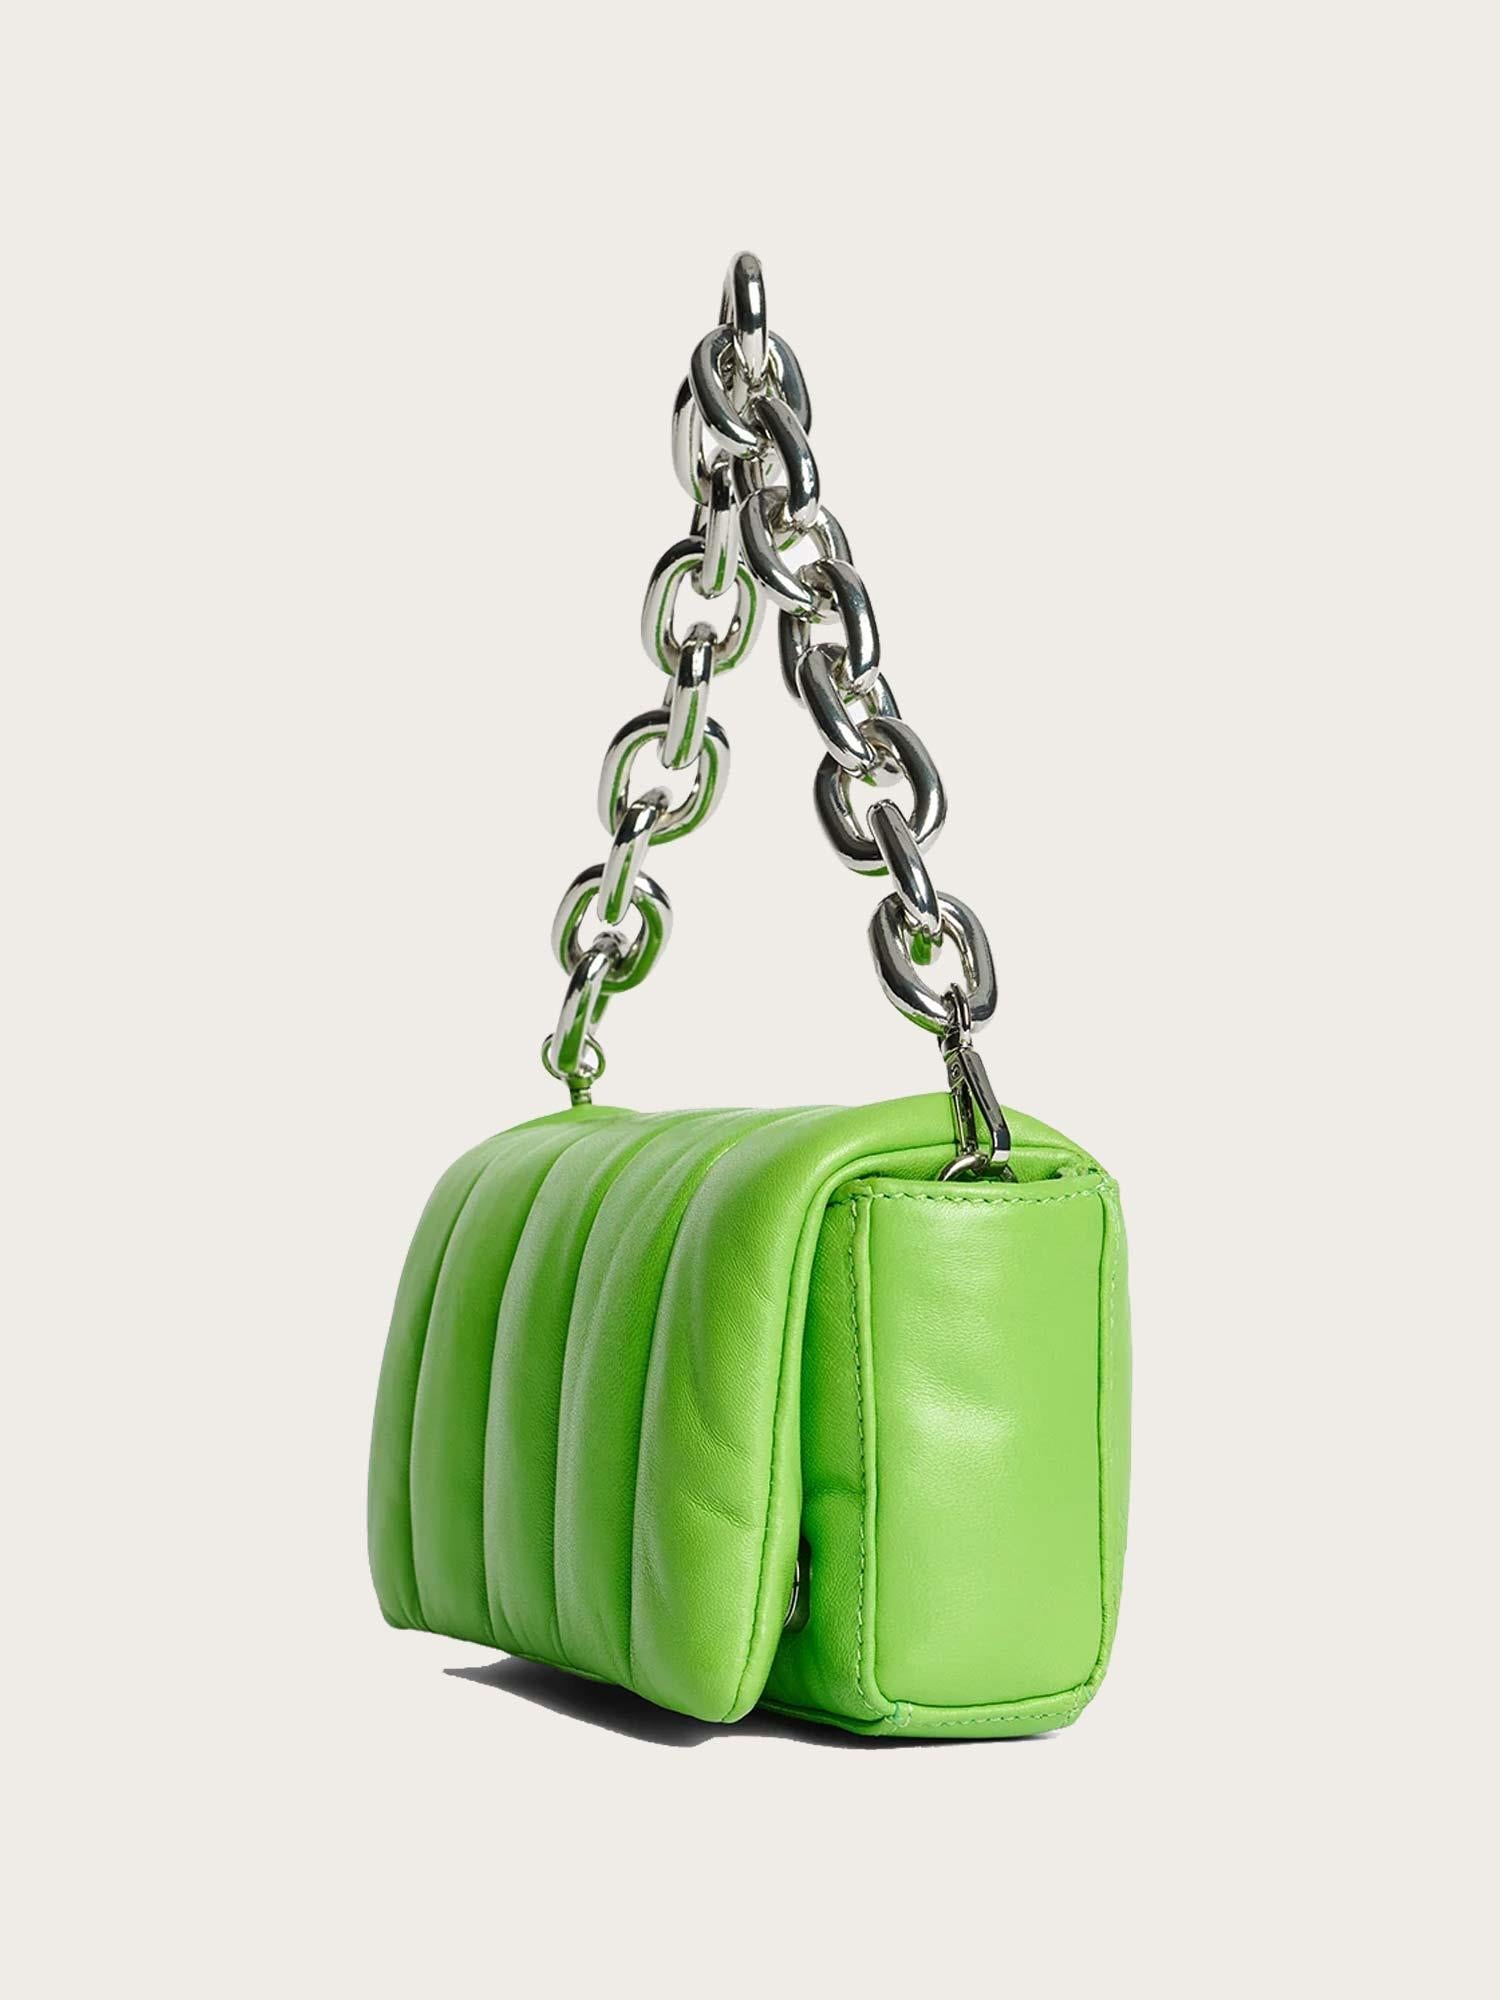 Hera Panel Bag - Peridot Green/Silver